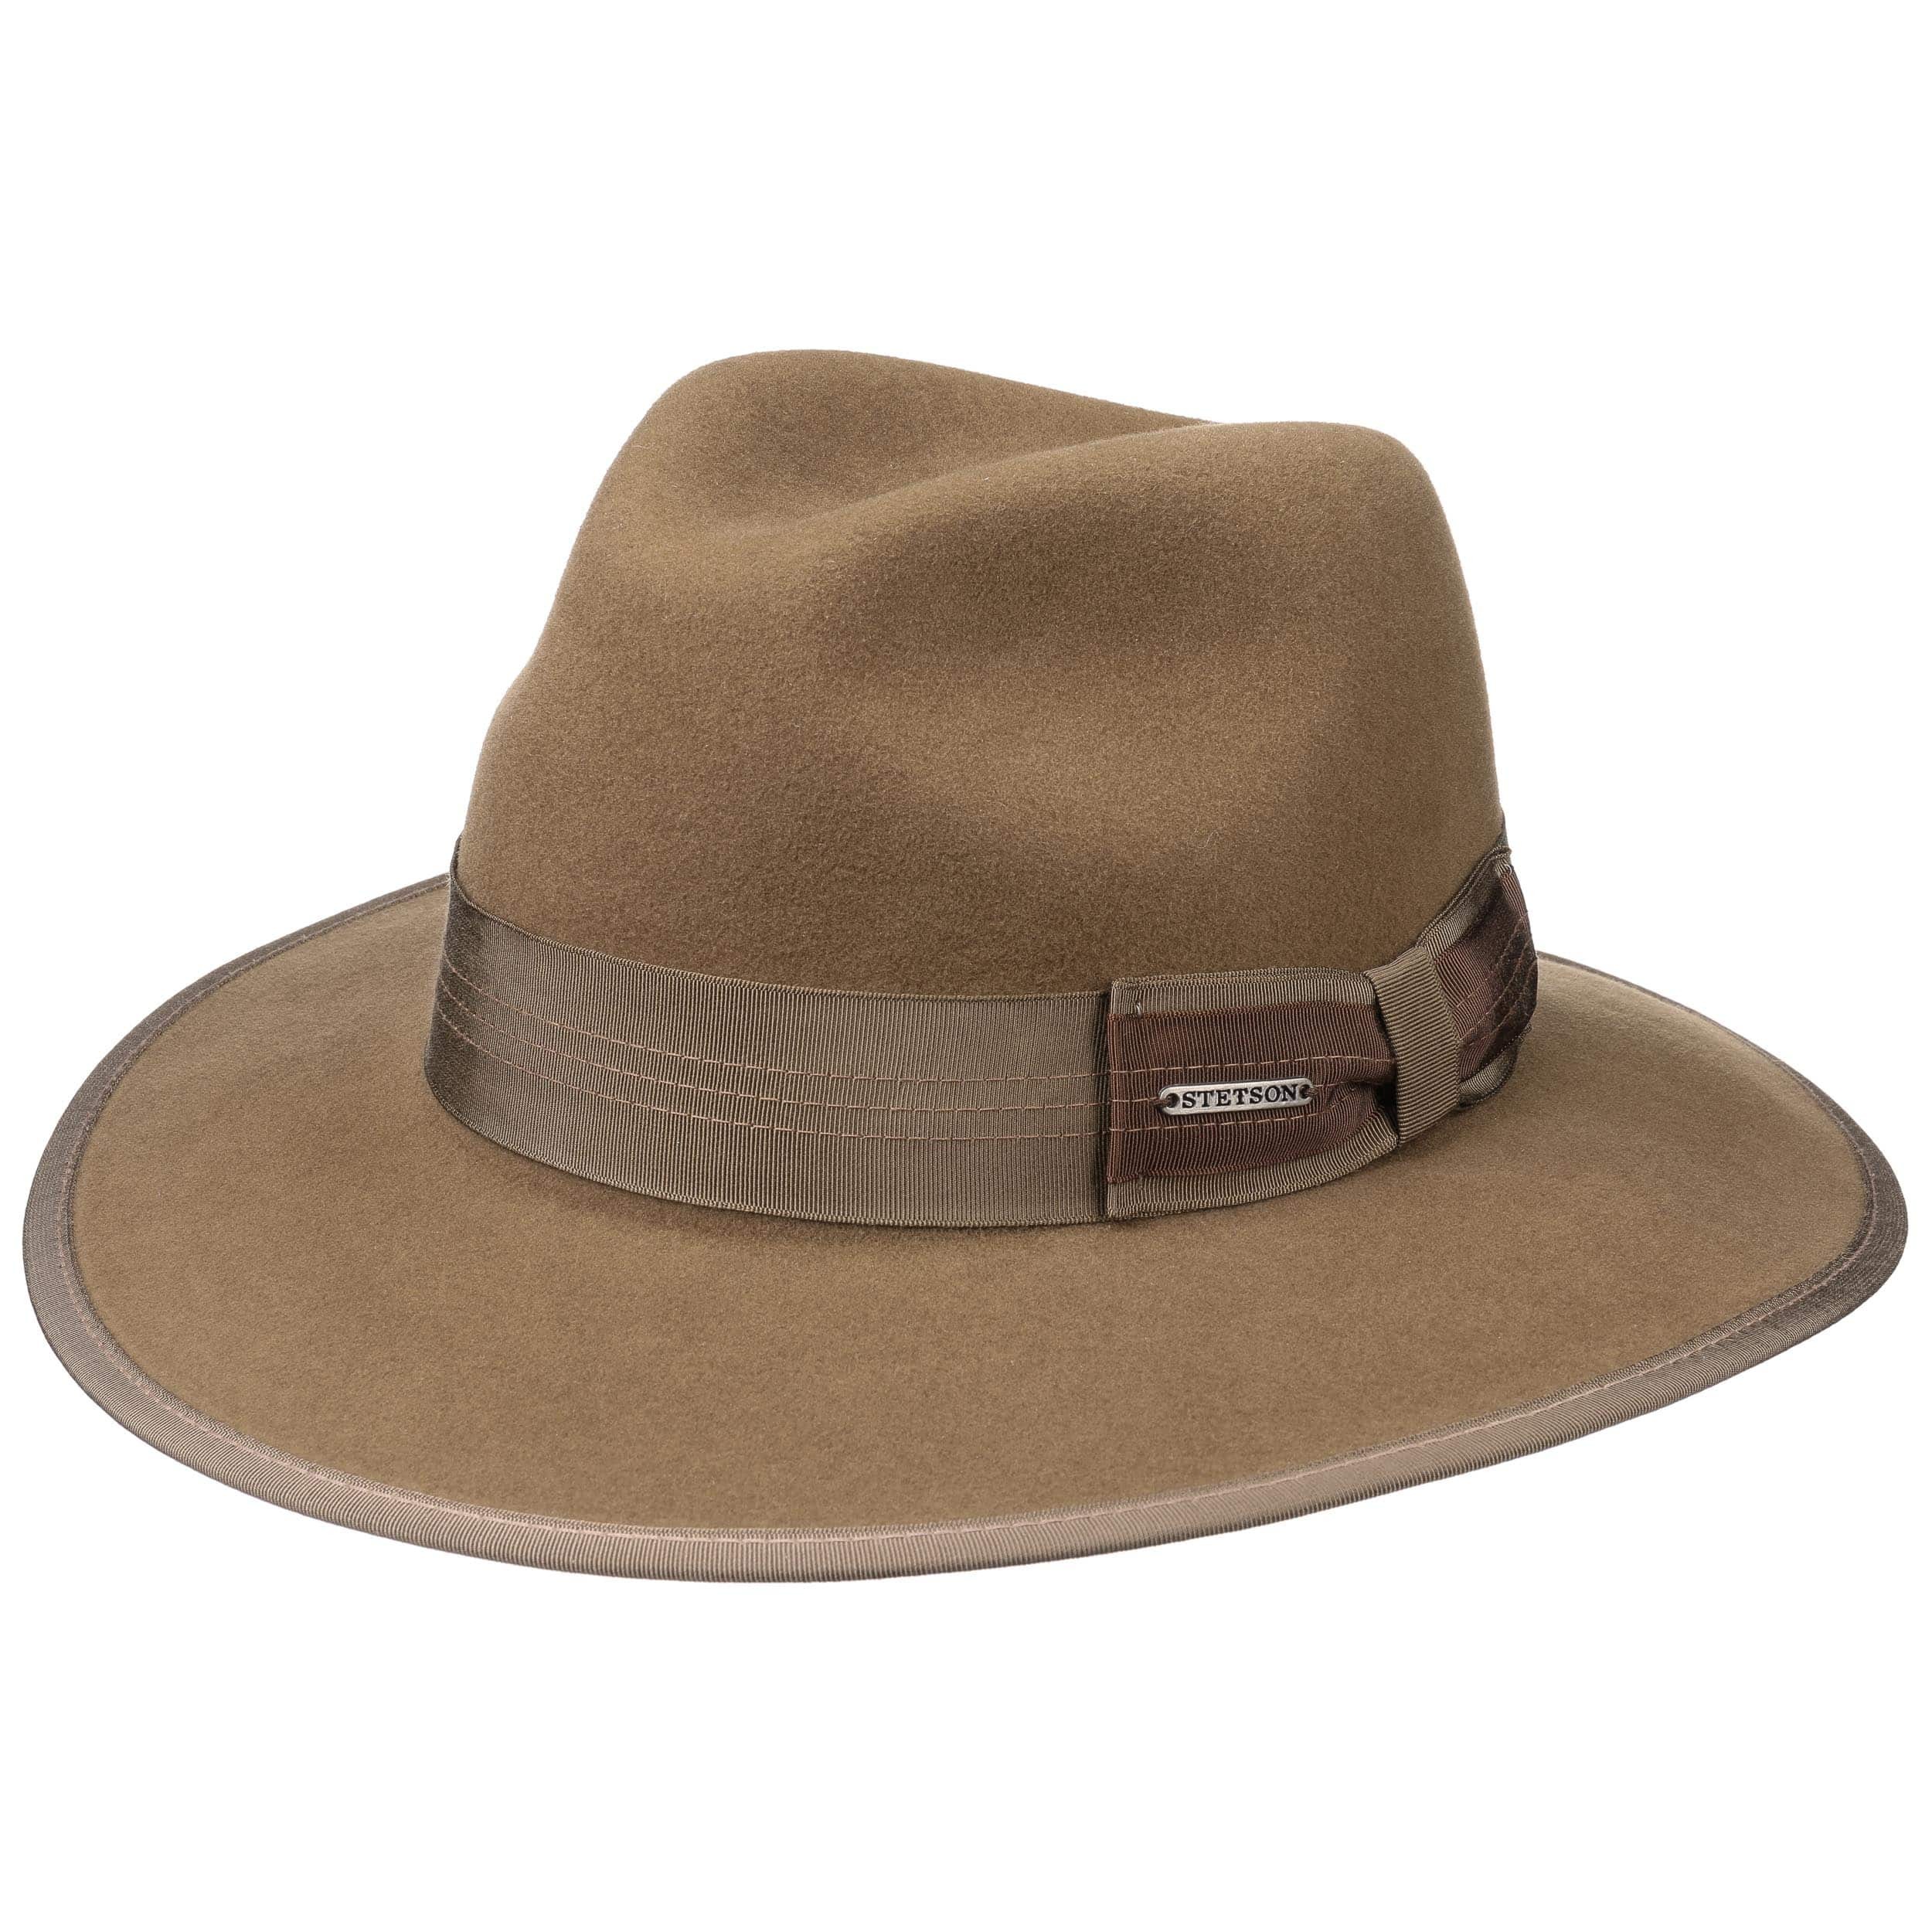 Henderson VitaFelt Hat by Stetson - 129,00